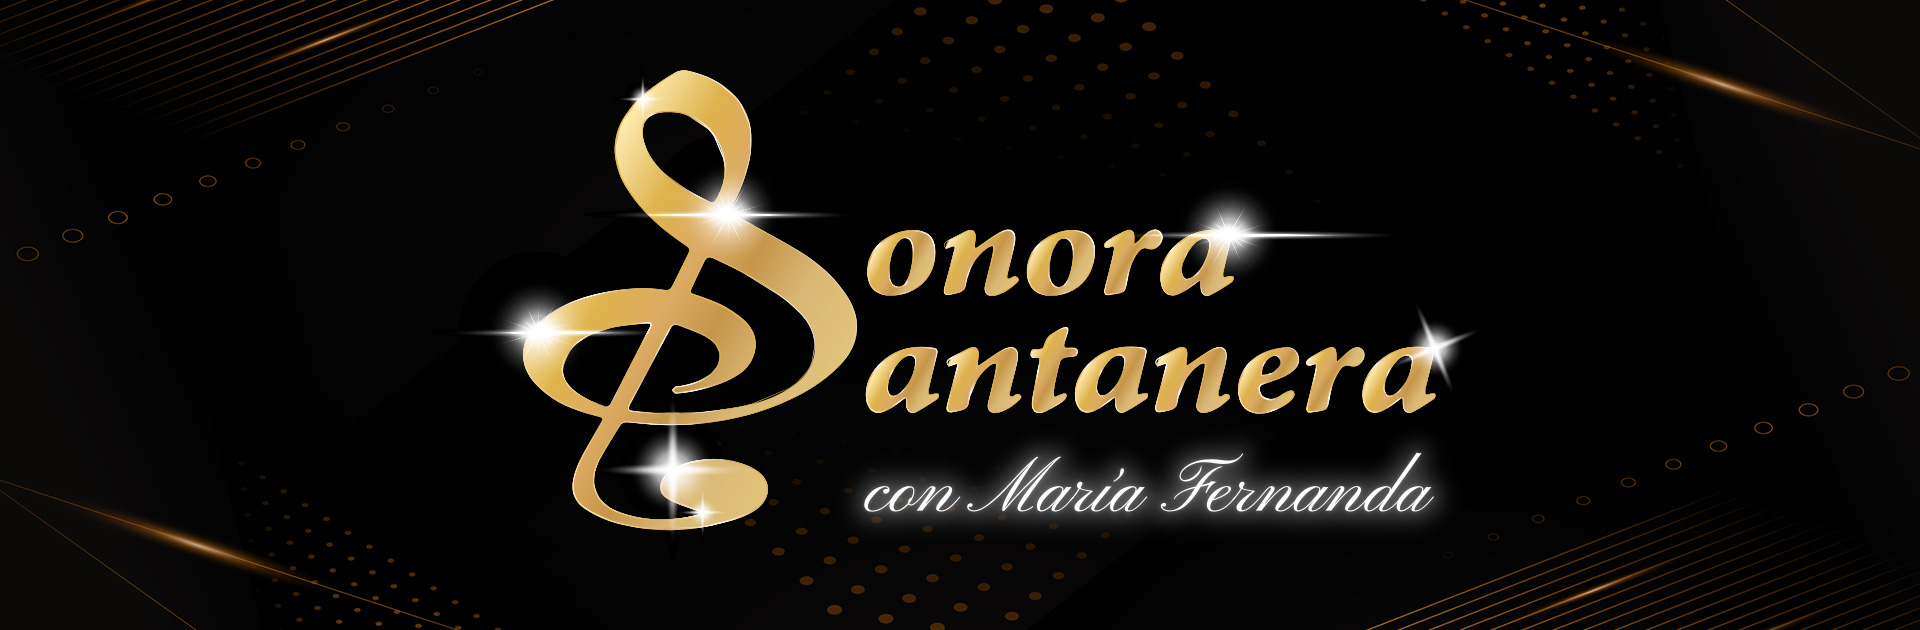 Sonora Santanera con María Fernanda